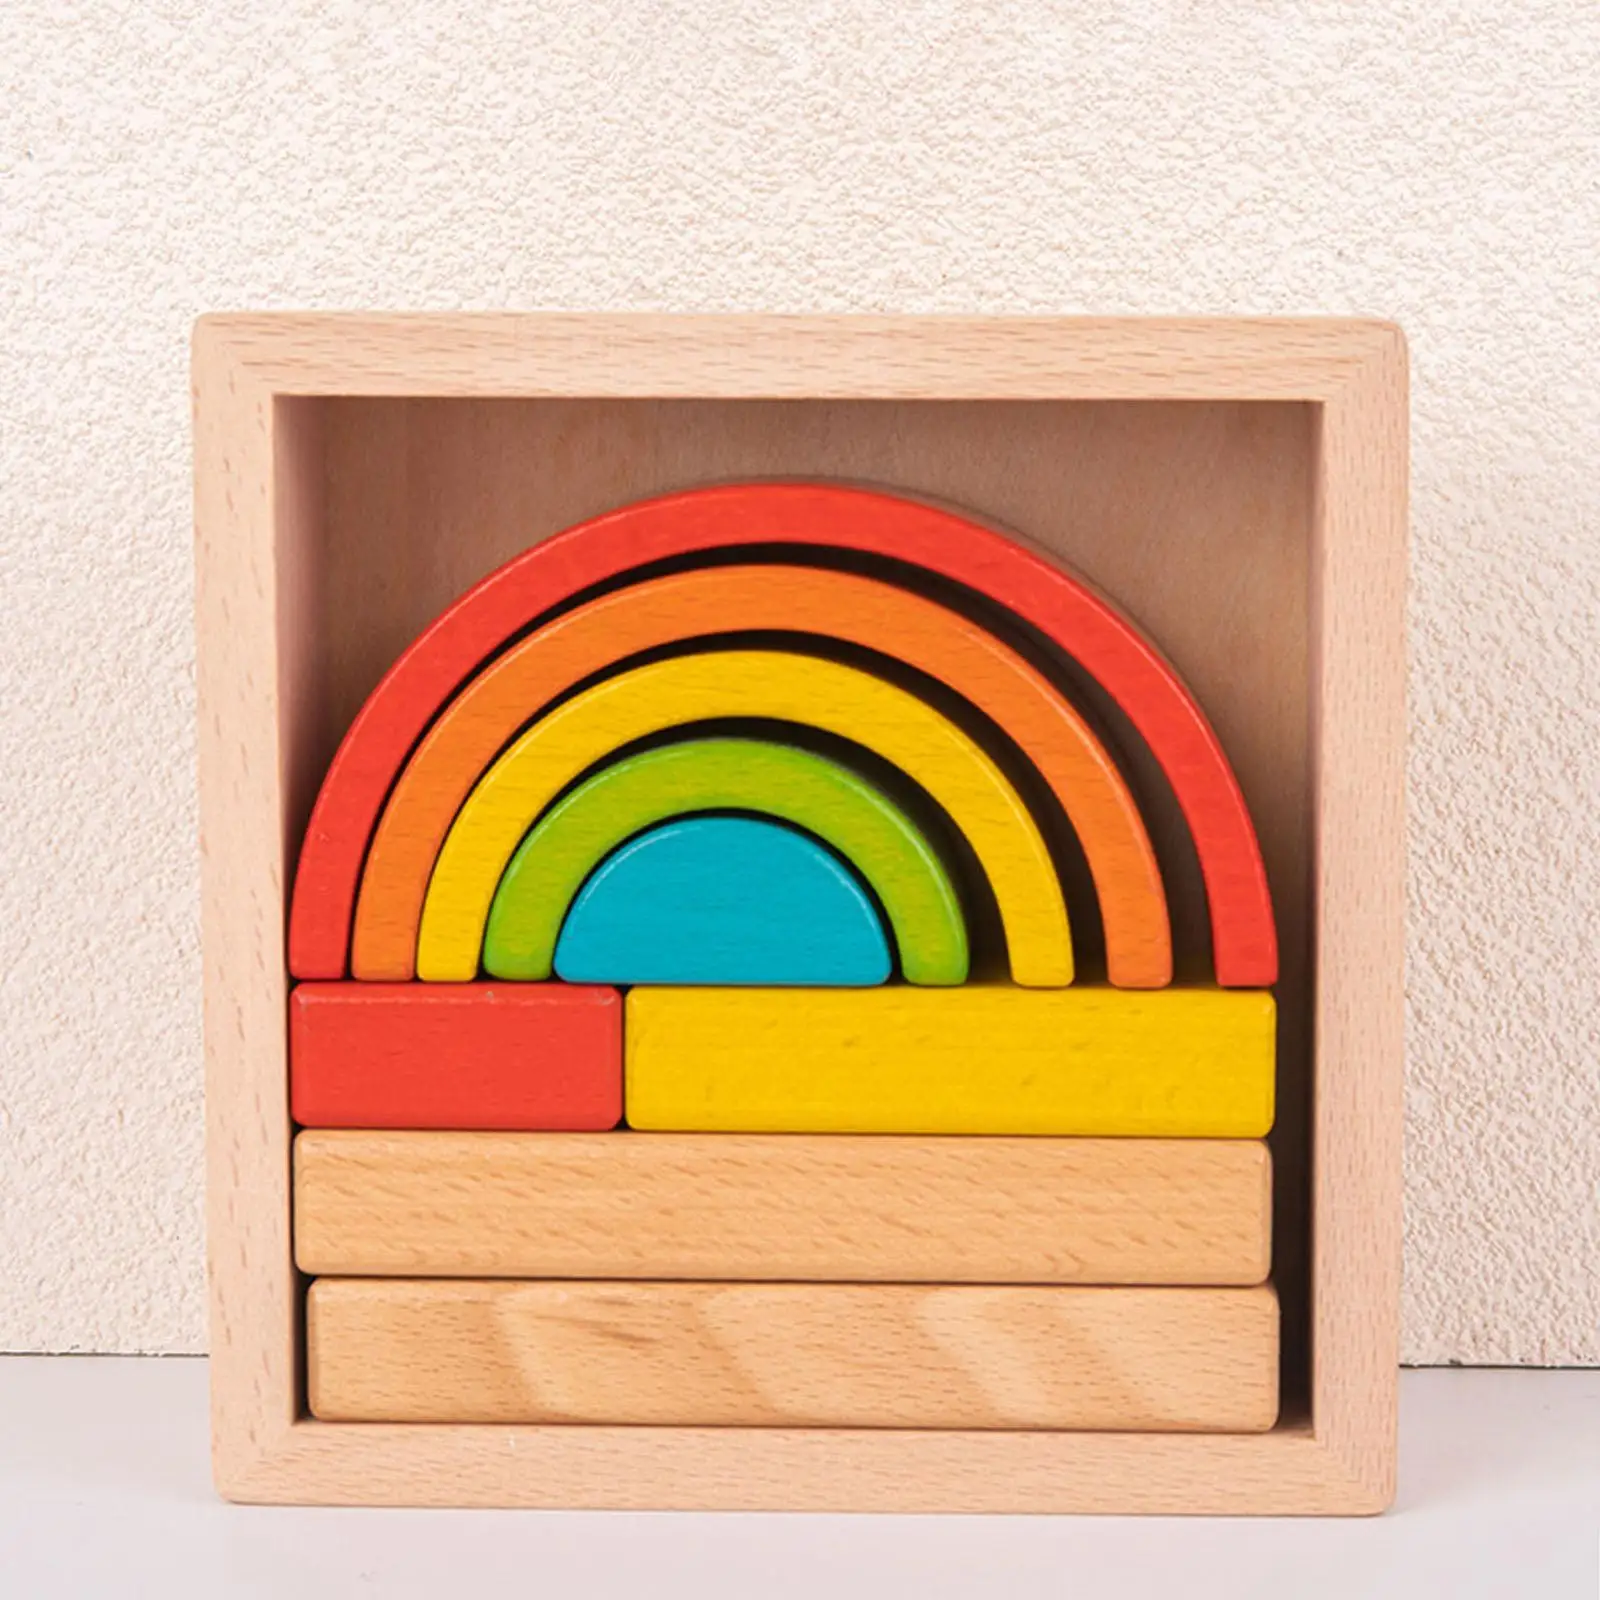 Creative Wooden Stacker Nesting Puzzle Blocks Montessori Early Development Building Blocks Educational Toys for Children Kids